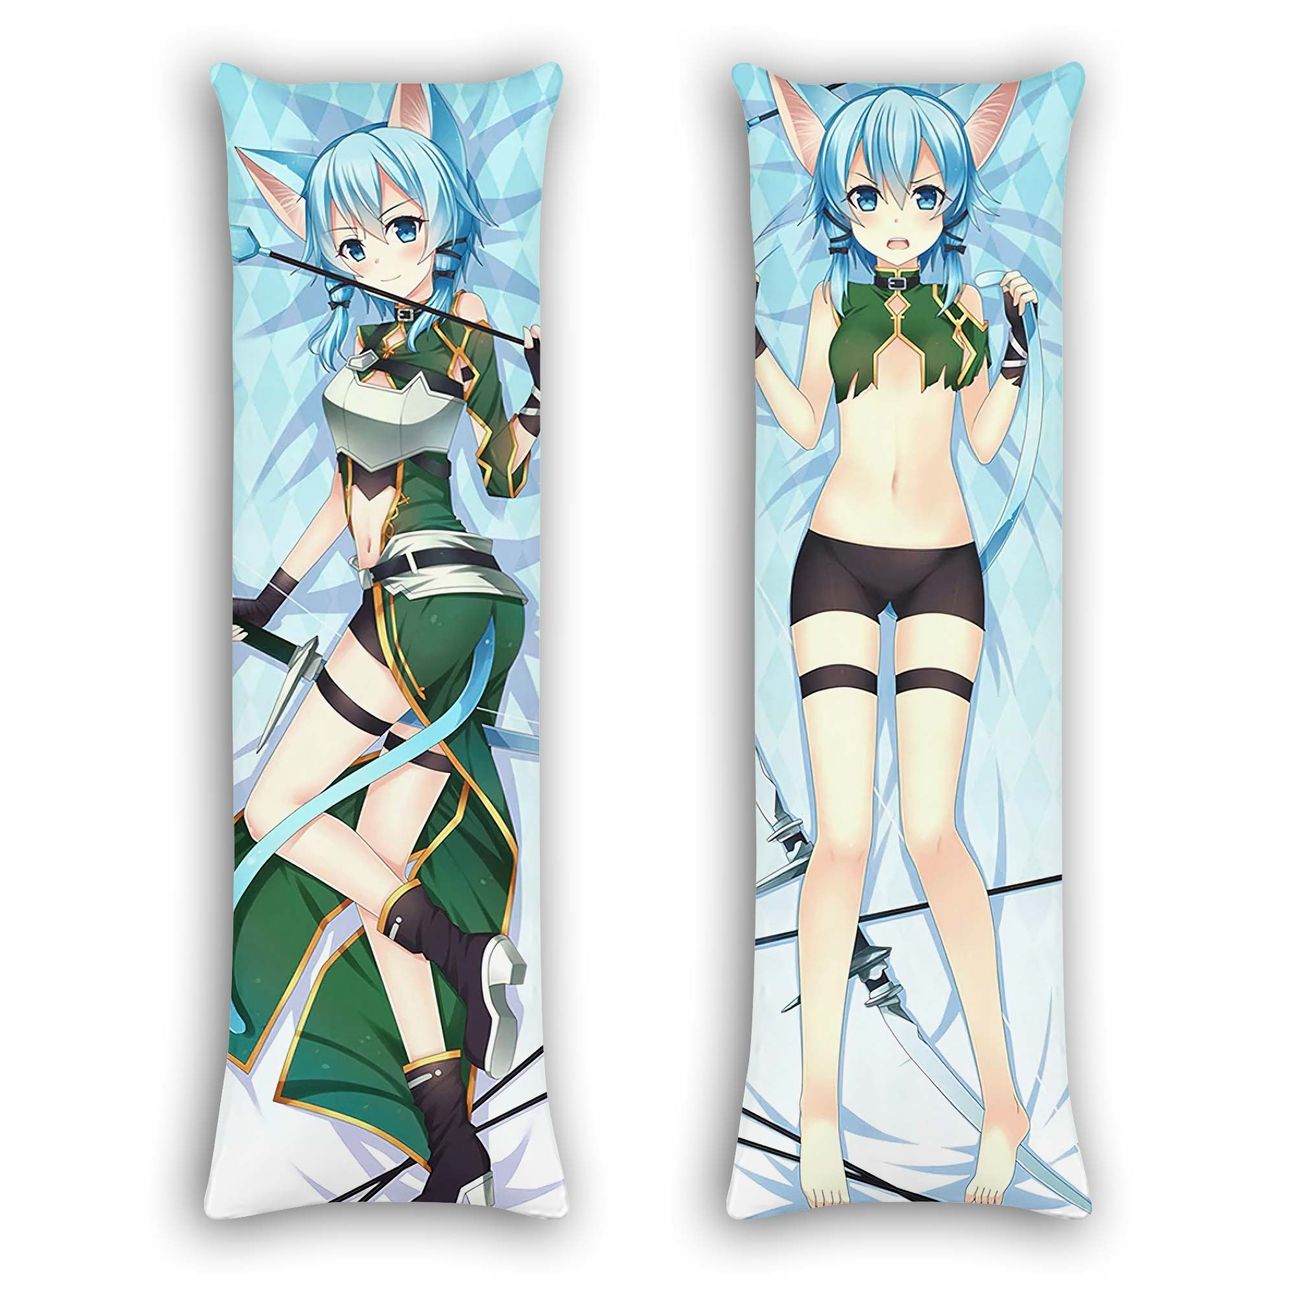 Sword Art Online anime cushion\pillow 50cm*150cm 2 styles